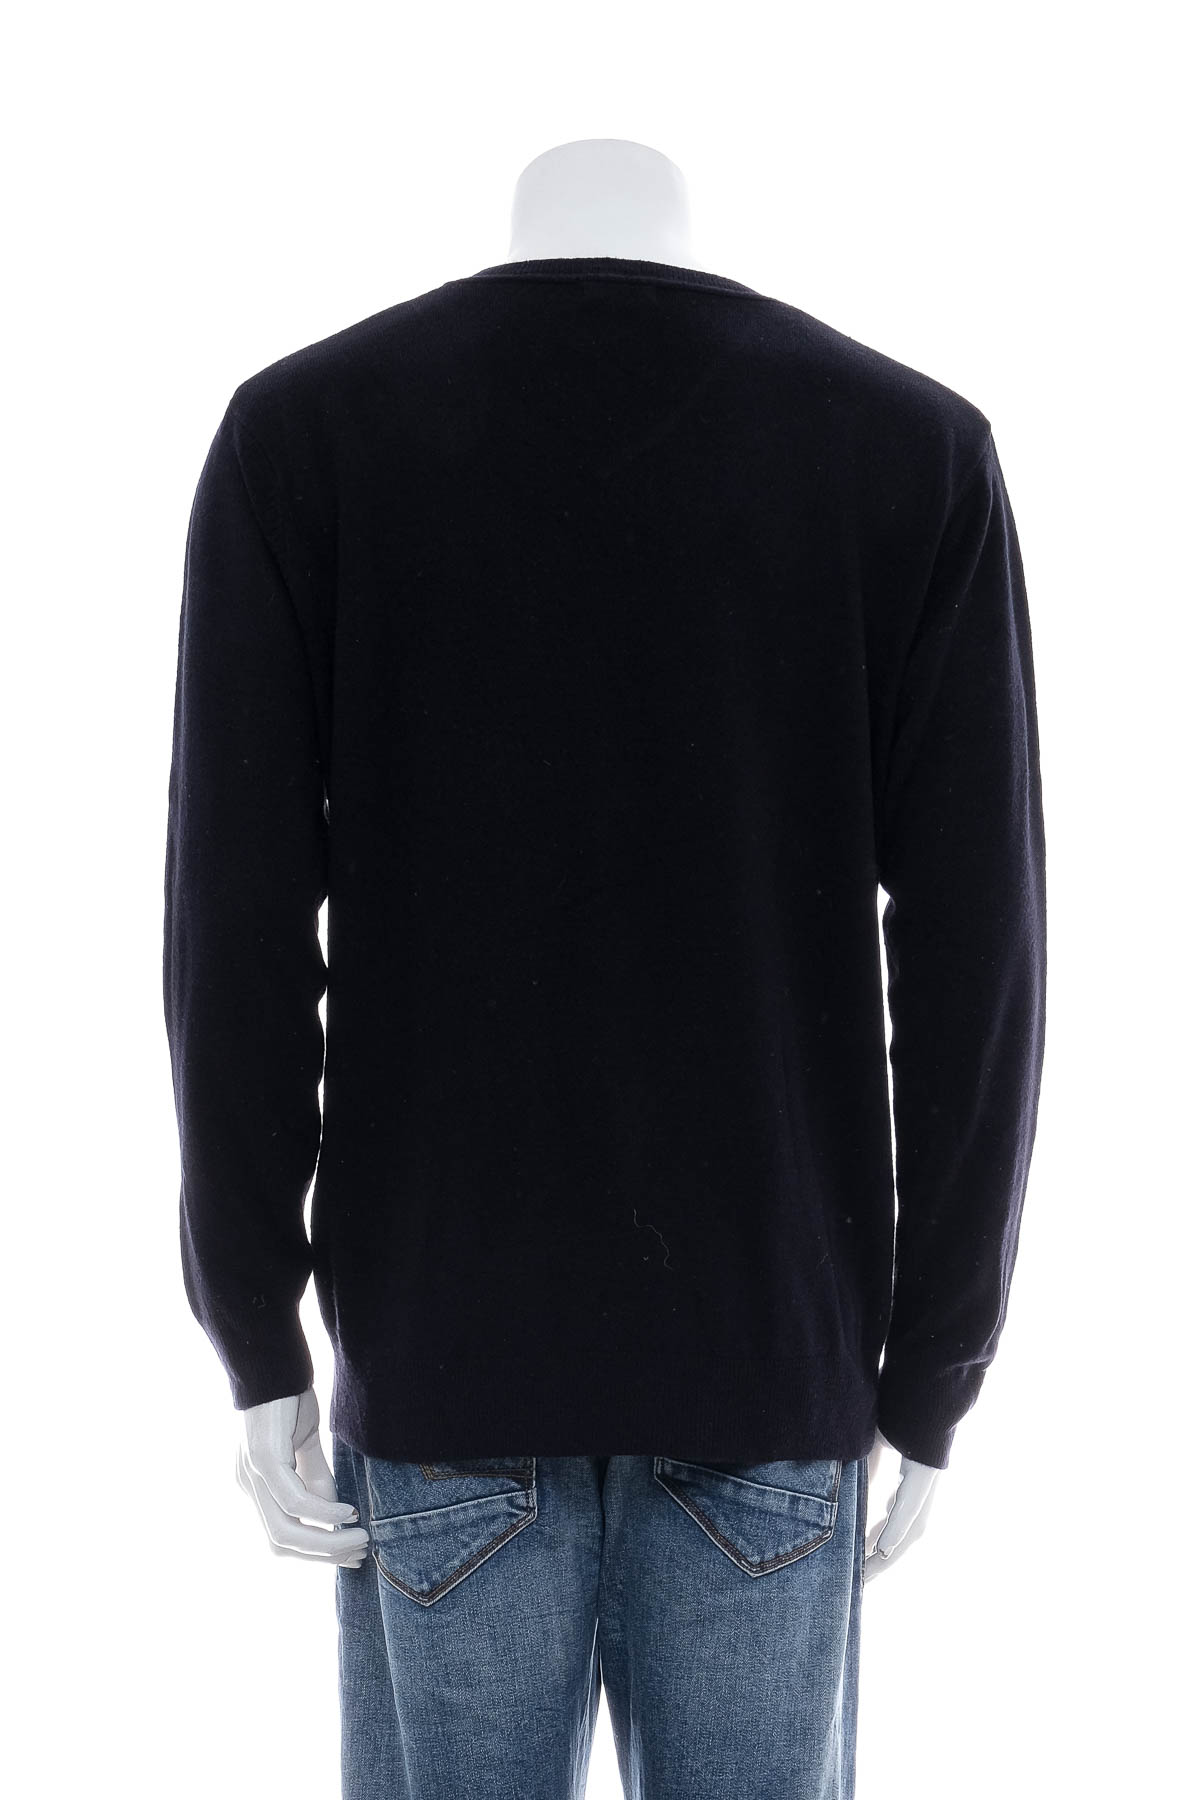 Men's sweater - CEDARWOOD STATE - 1